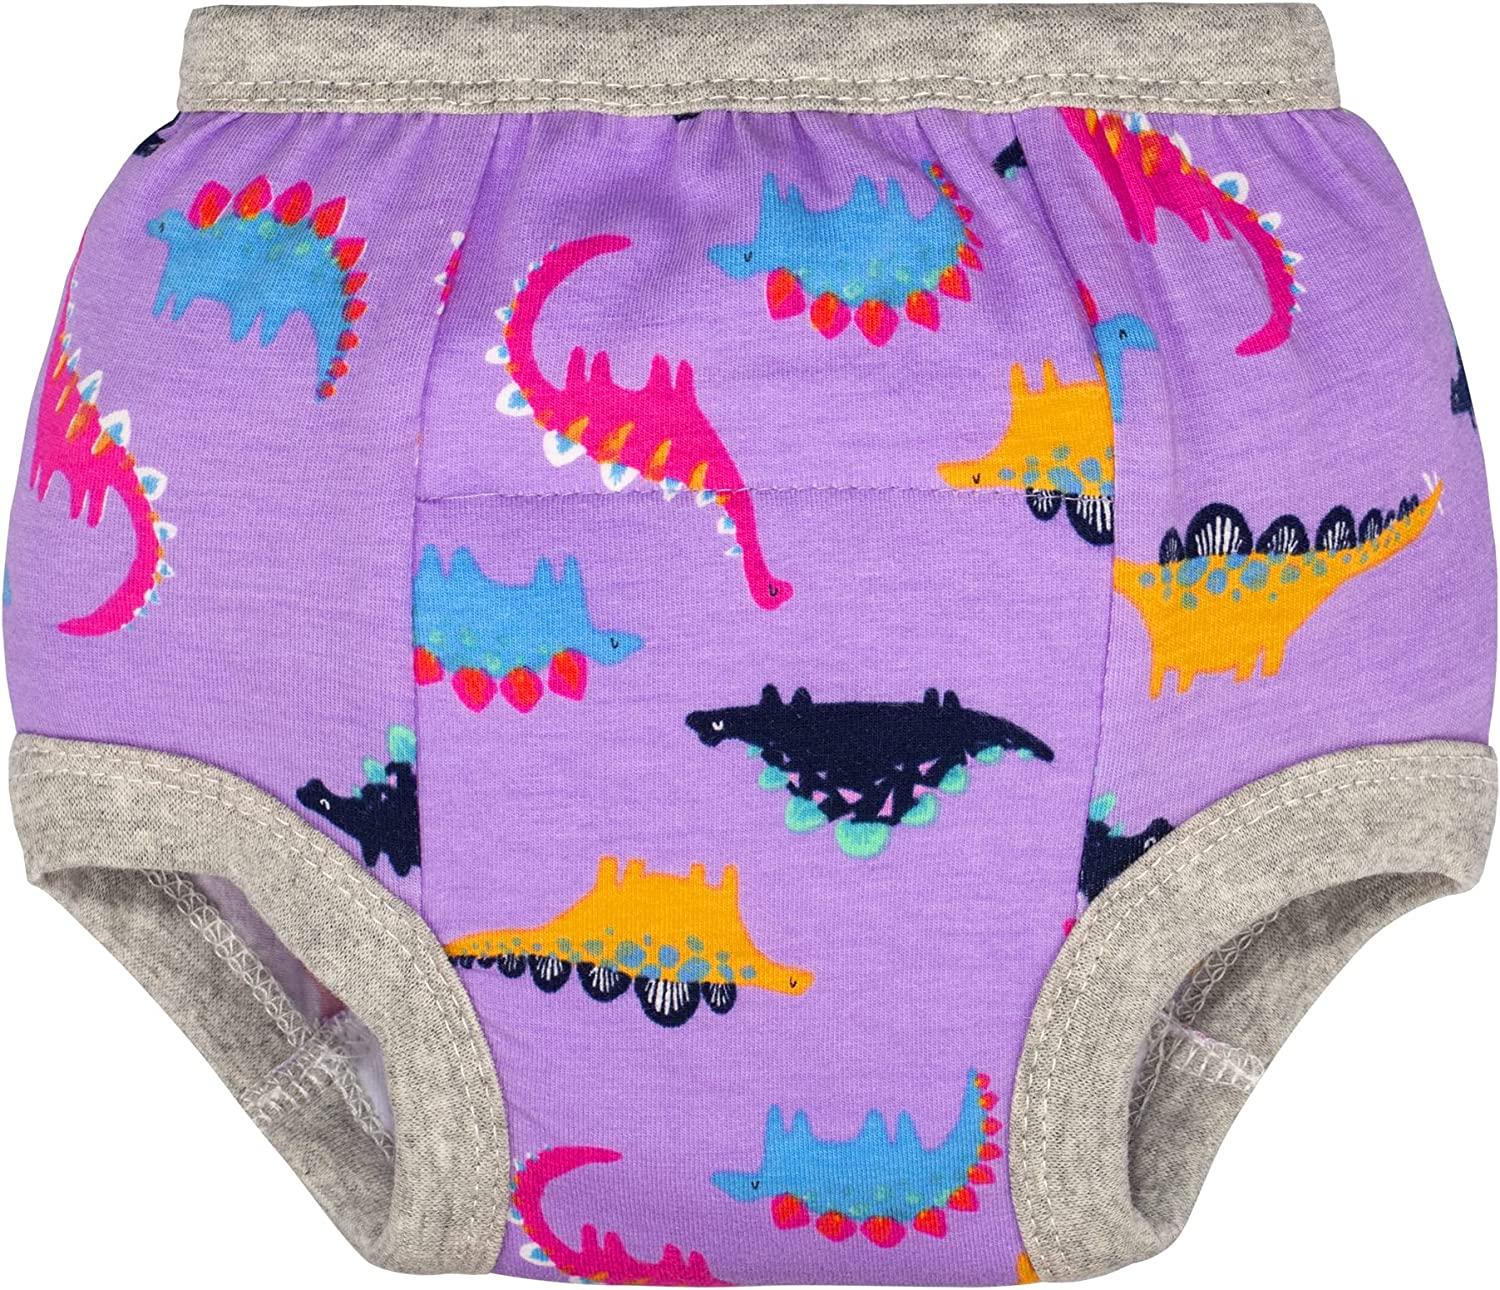  BIG ELEPHANT Baby Girls Training Underpants for